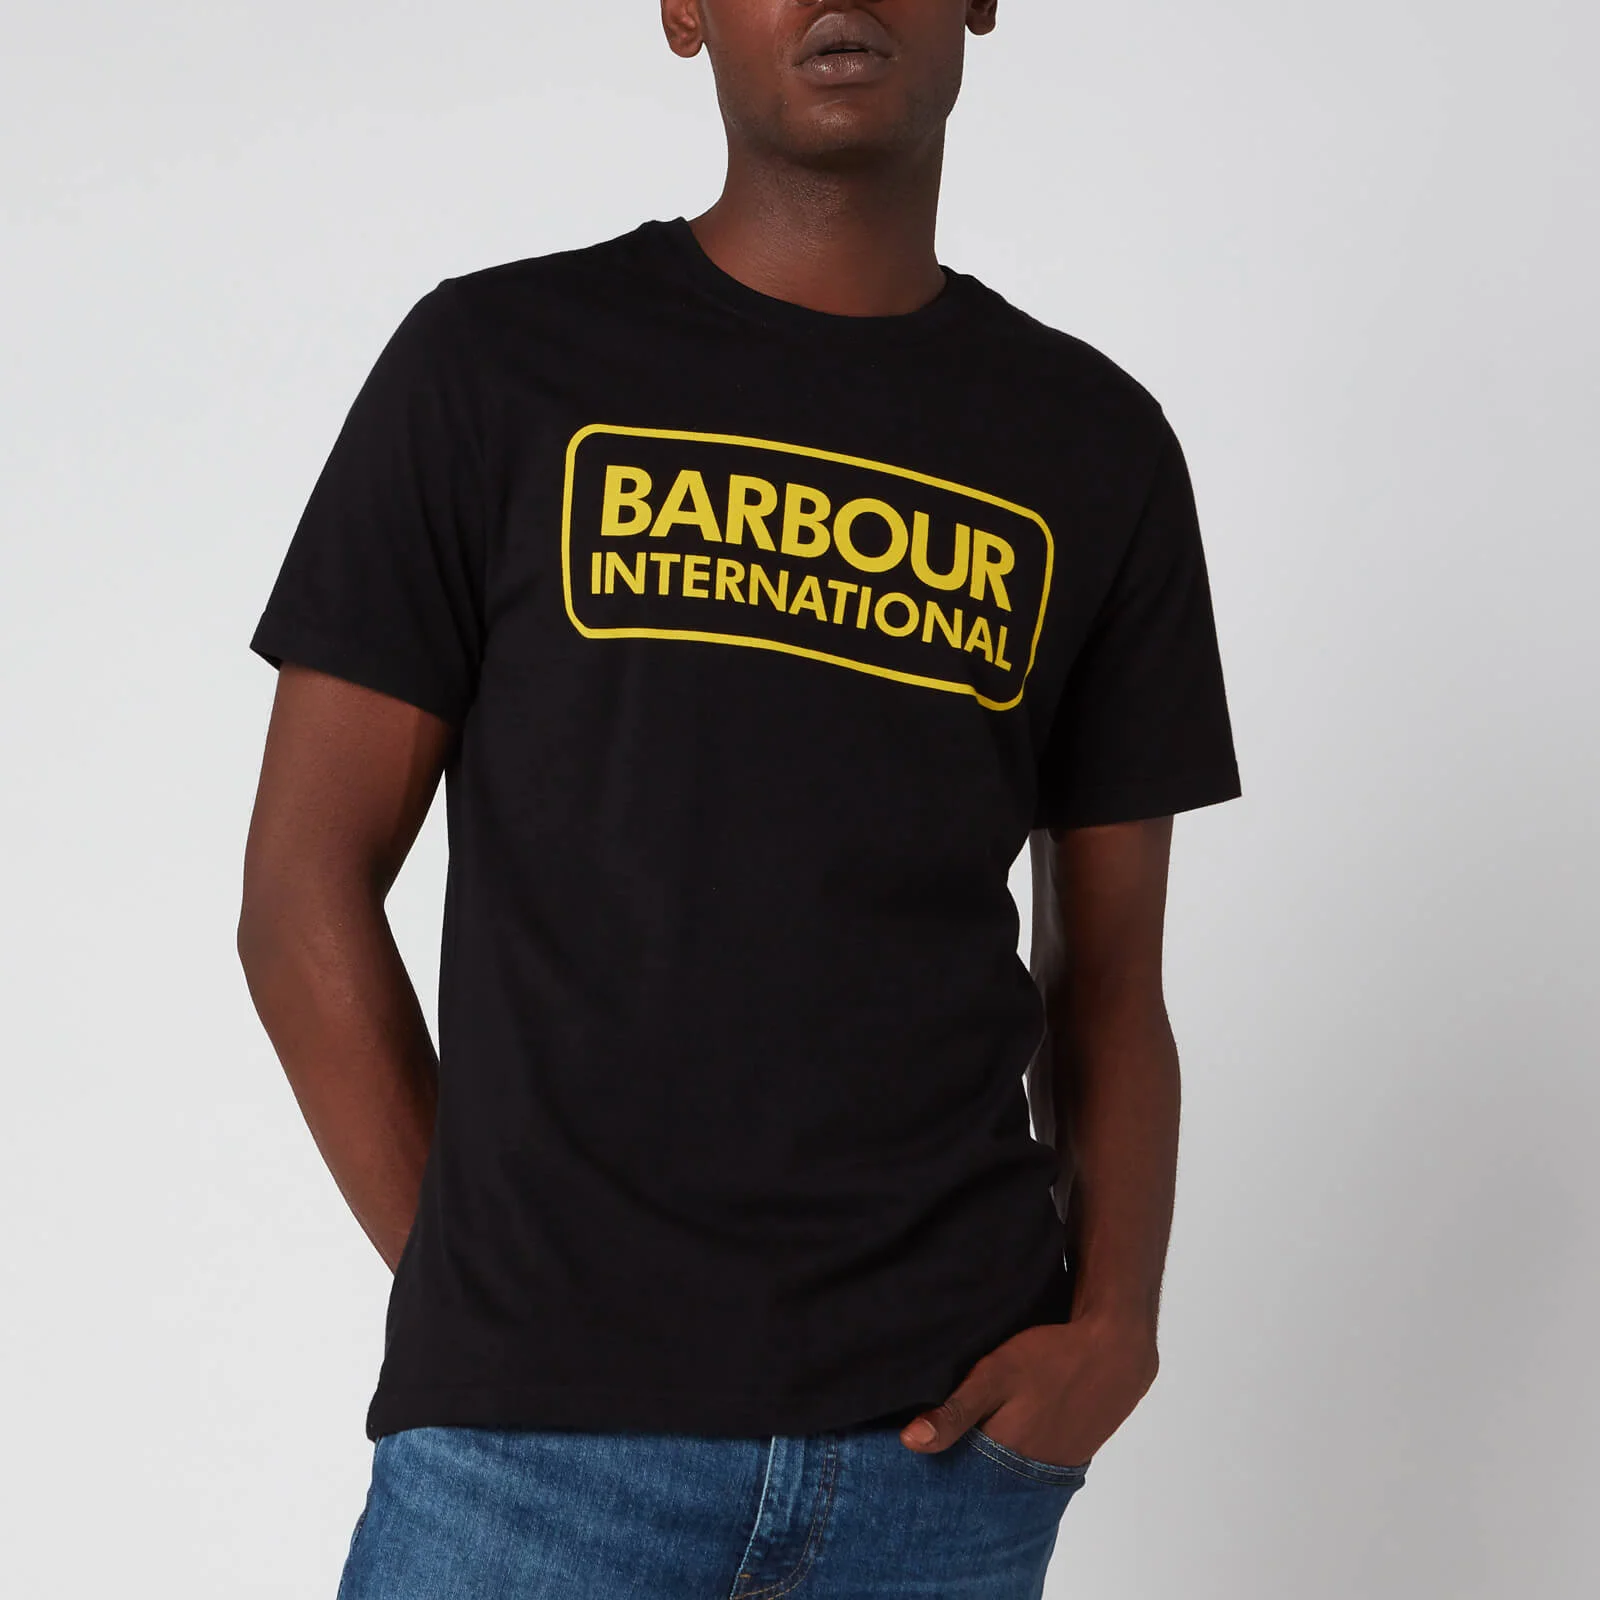 Barbour International Men's Essential Large Logo T-Shirt - Black/Yellow Image 1